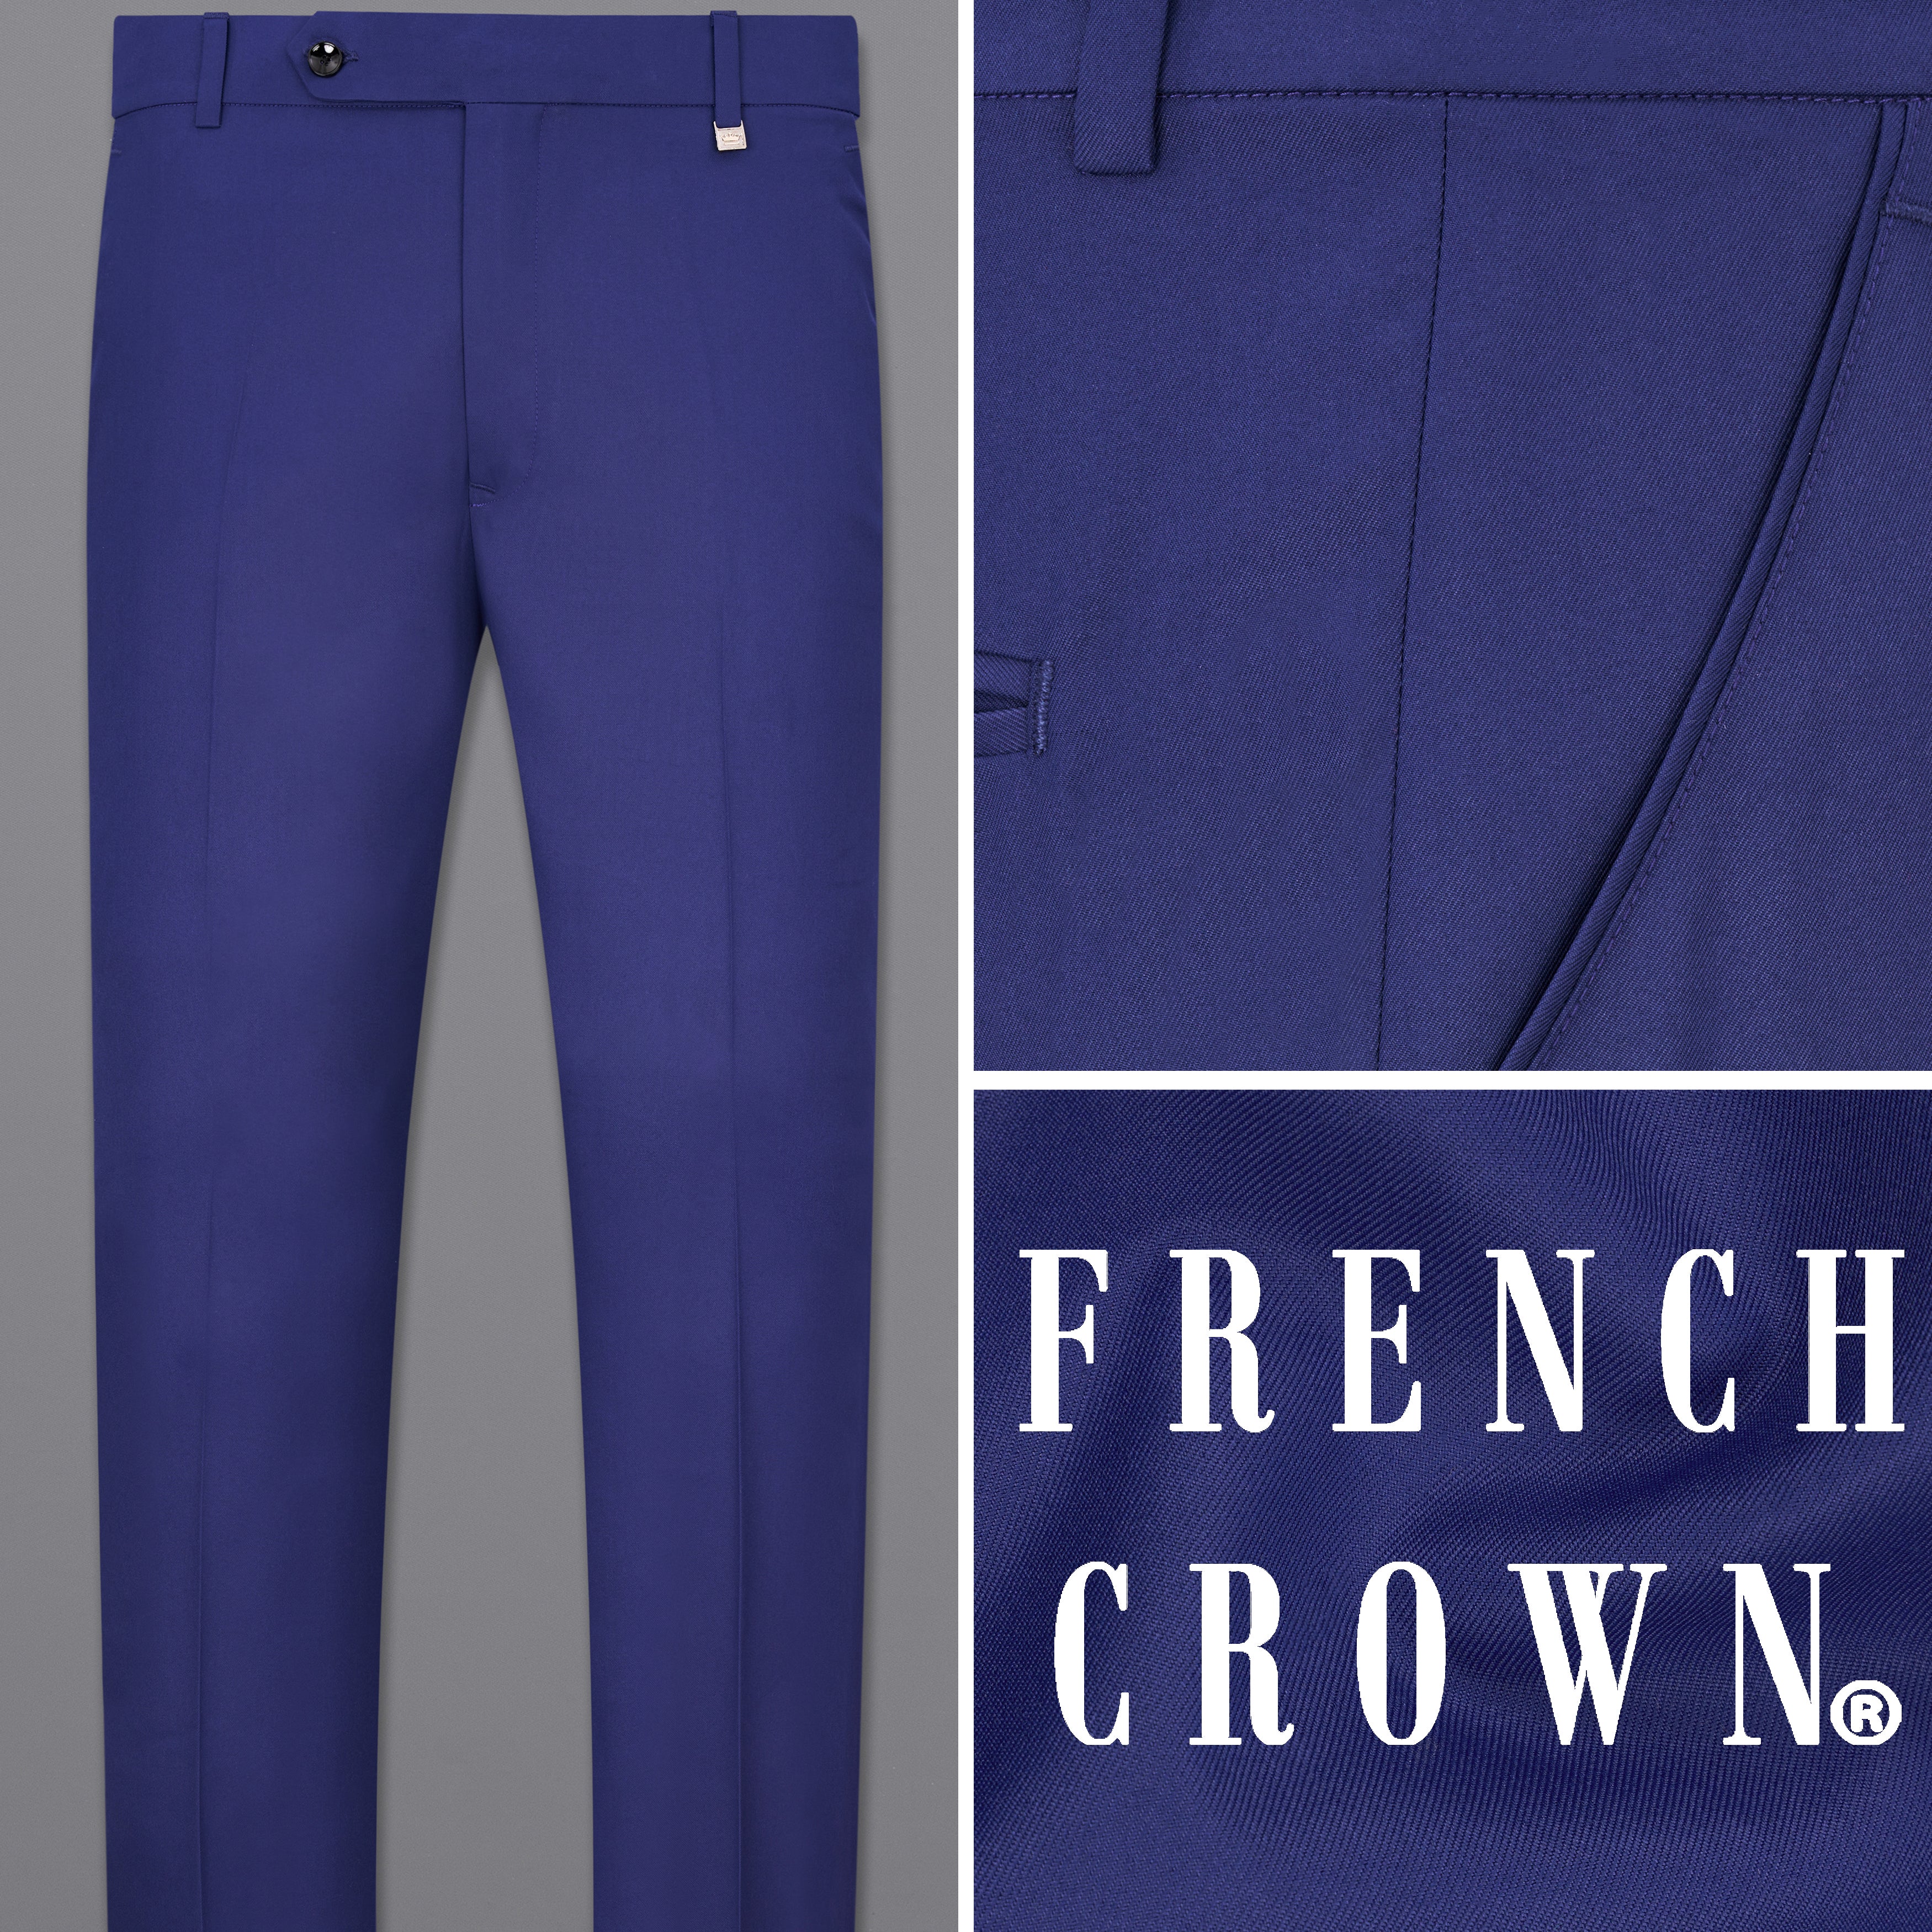 Pesado Navy Blue & Royal Blue Trouser For Men's Pants